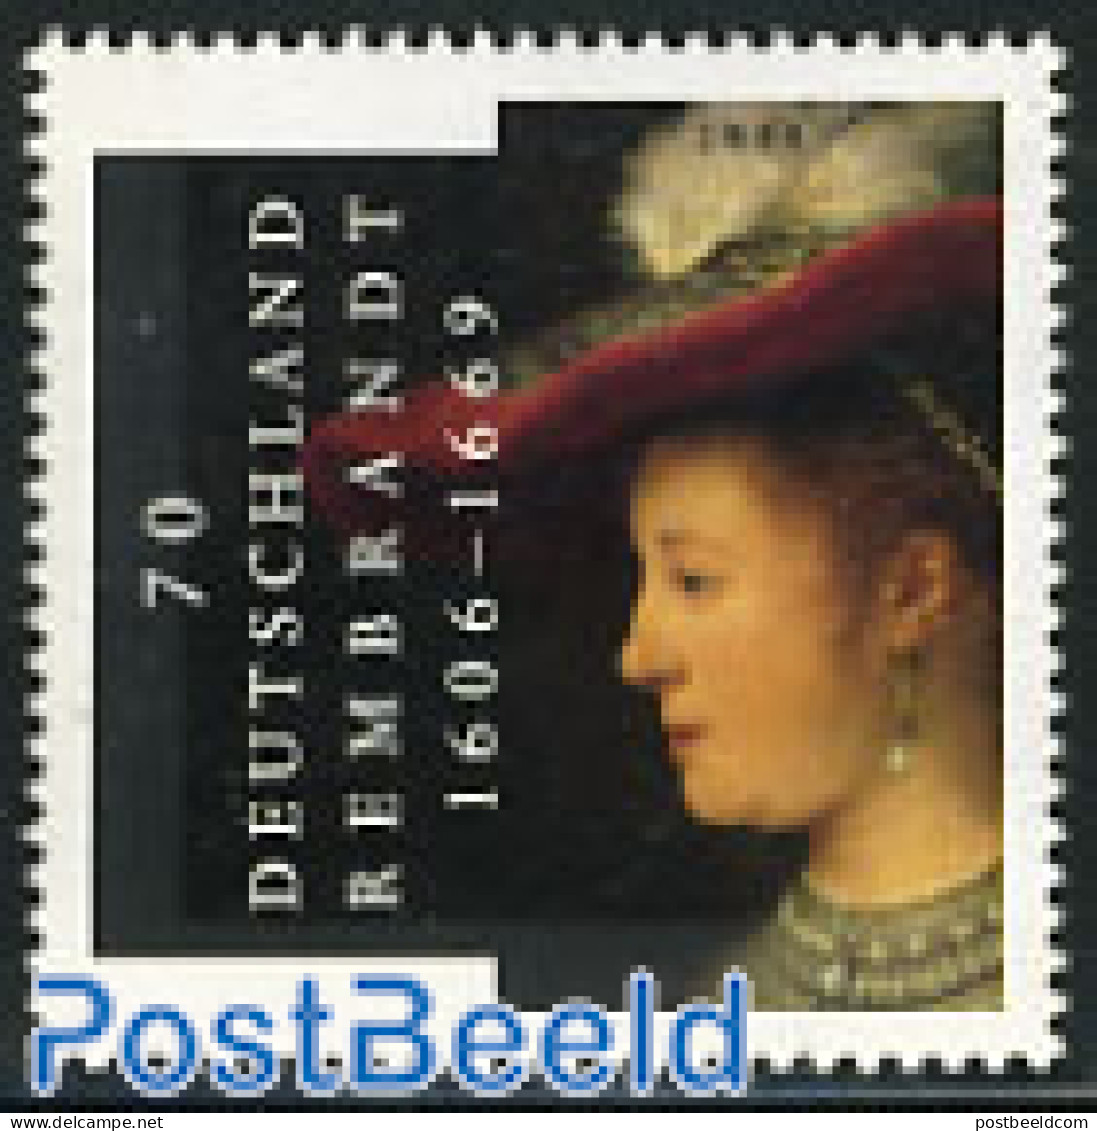 Netherlands 2006 Rembrandt 1v (Only Valid For Postage In Netherland, Mint NH, Art - Paintings - Rembrandt - Nuevos